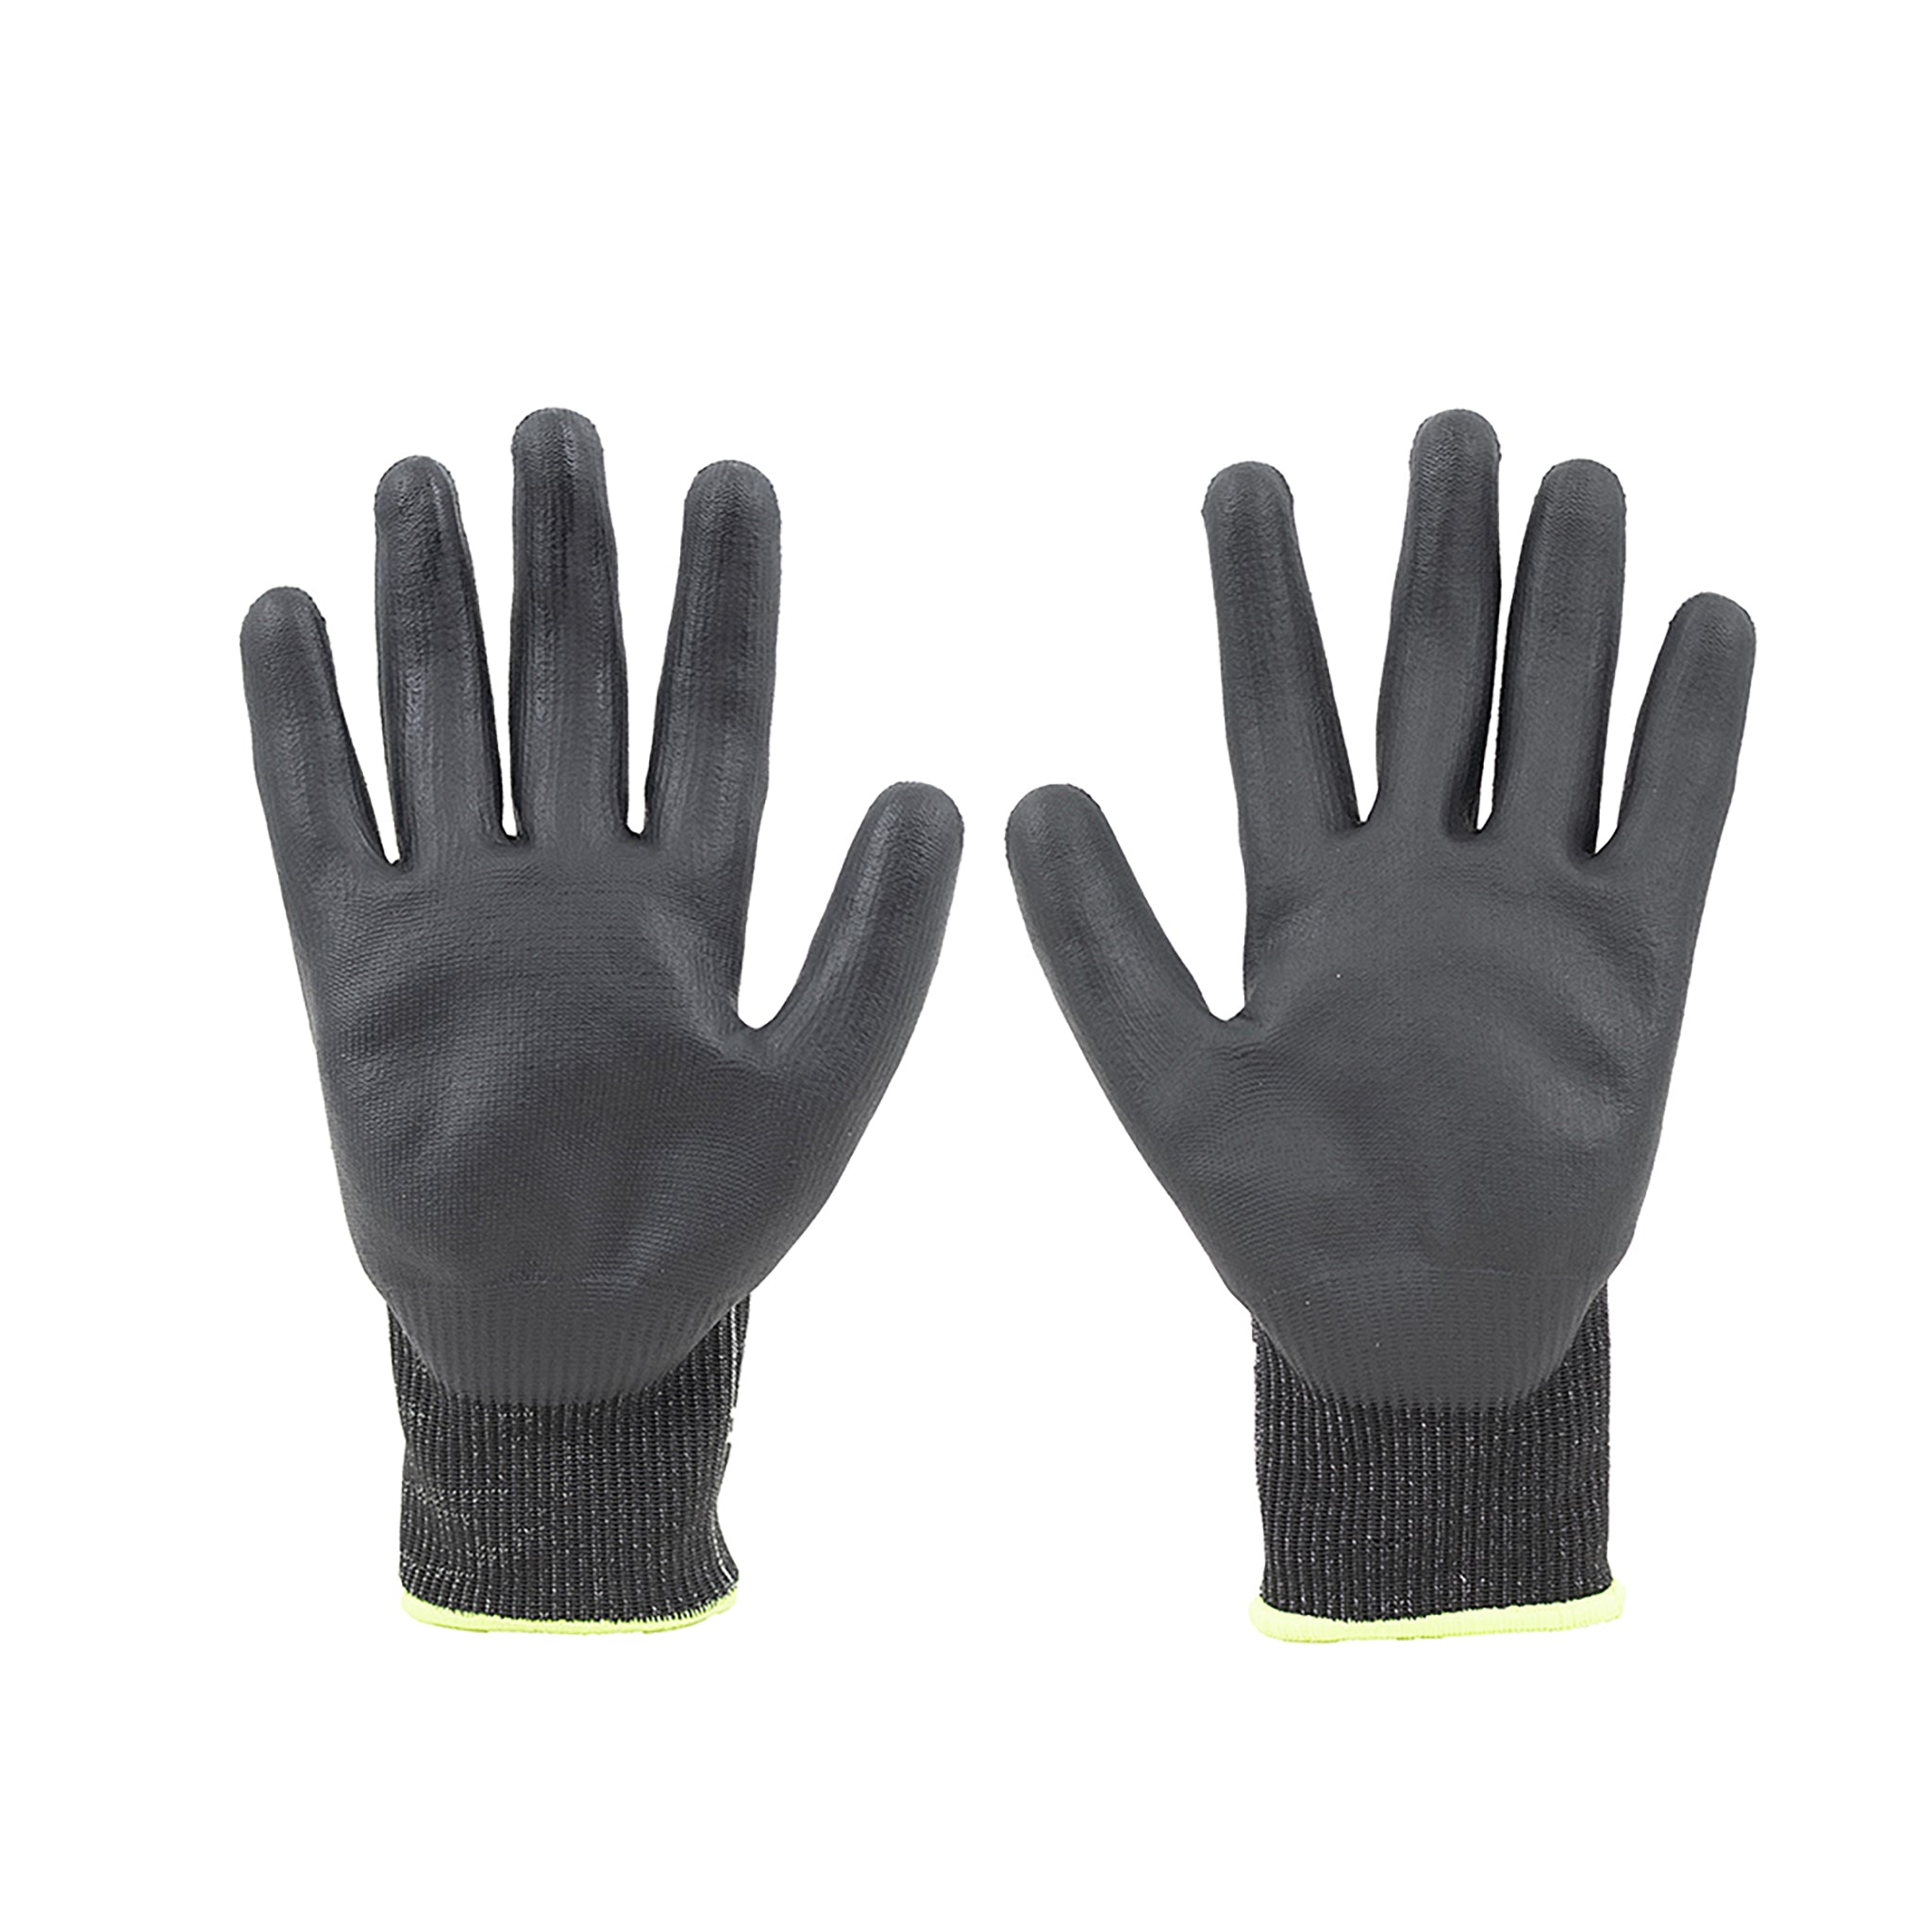 A3 General Purpose Work Gloves